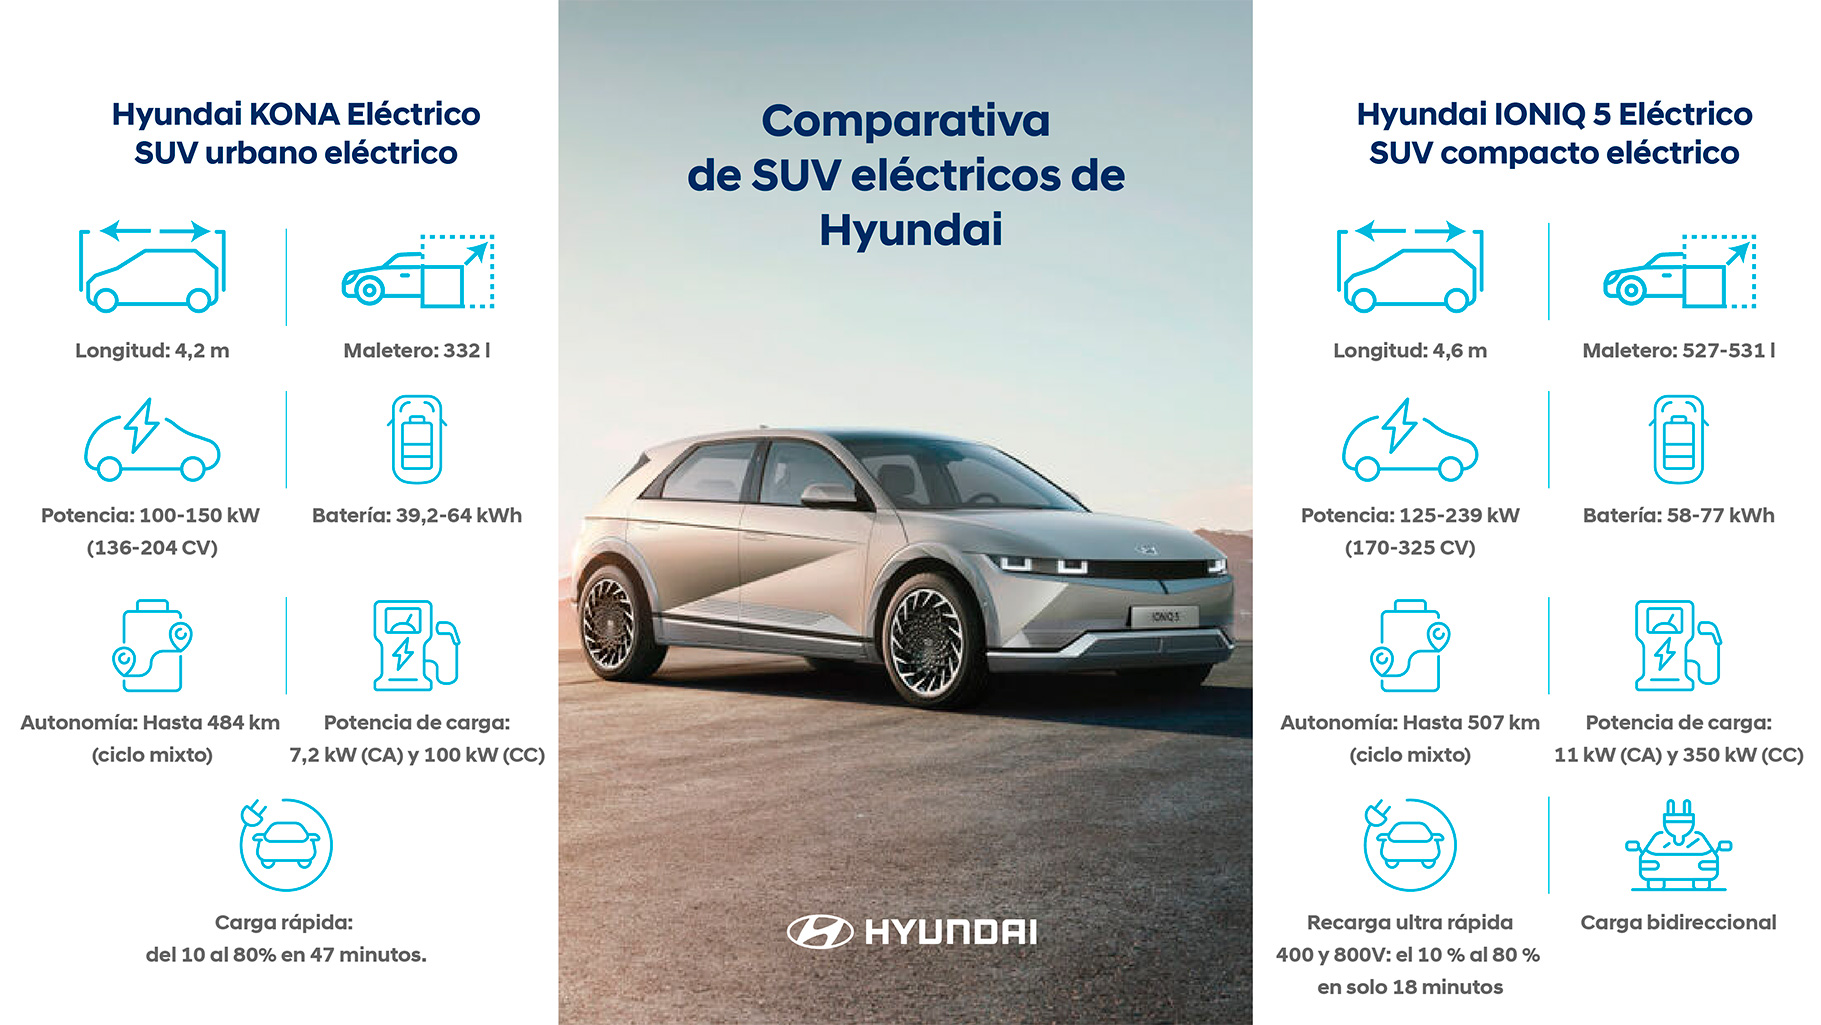 Carácterísticas del Hyundai TUCSON Híbrido Enchufable